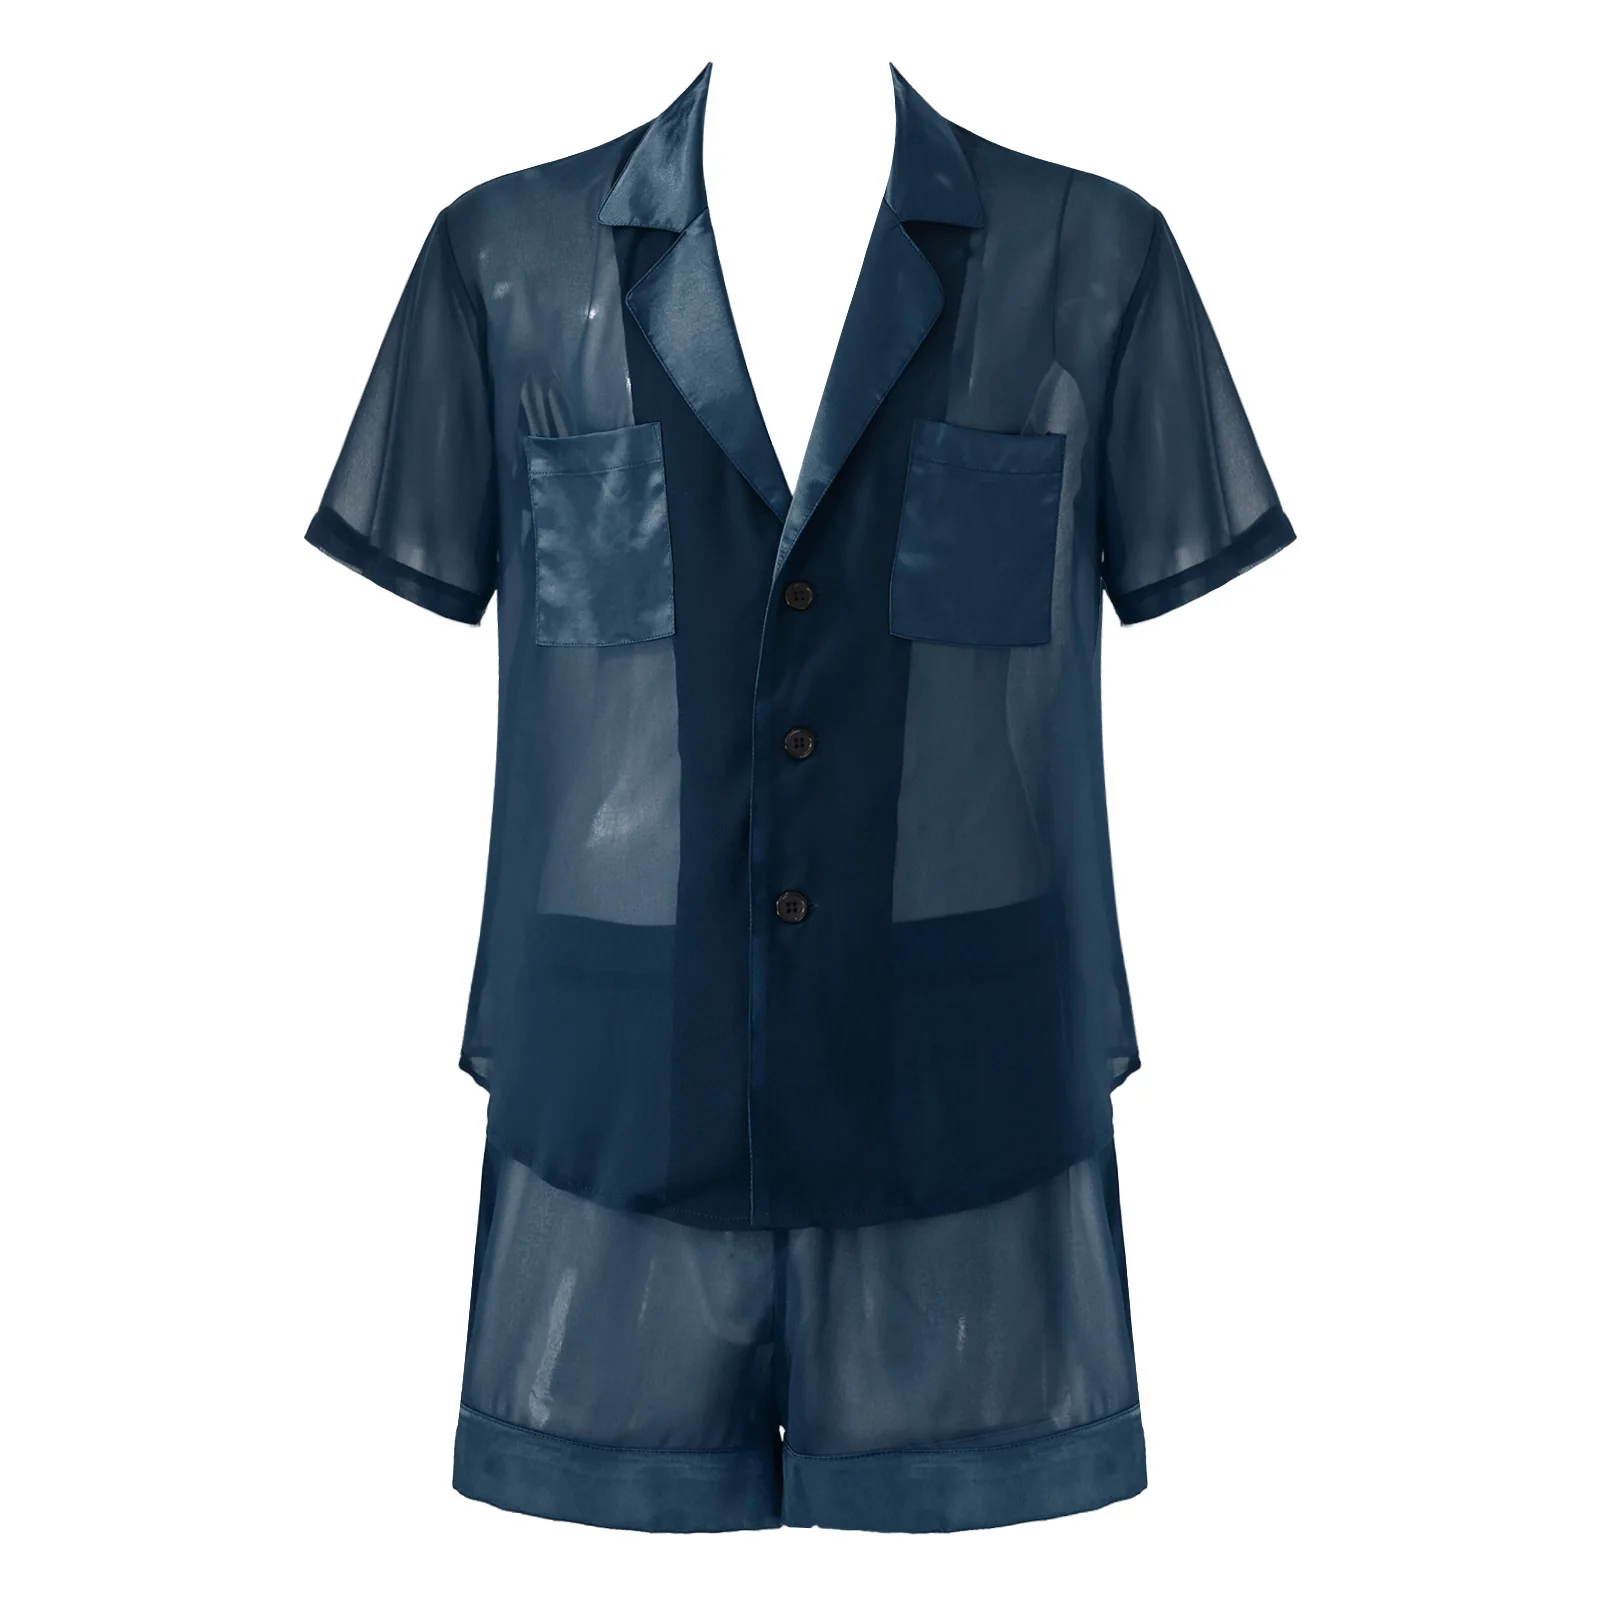 Mens Sleepwear Suit Homewear Satin Patchwork Sissy Nightwear See-through Pajama Set Lapel Short Sleeve Button Tops with Shorts mens cotton pajama shorts